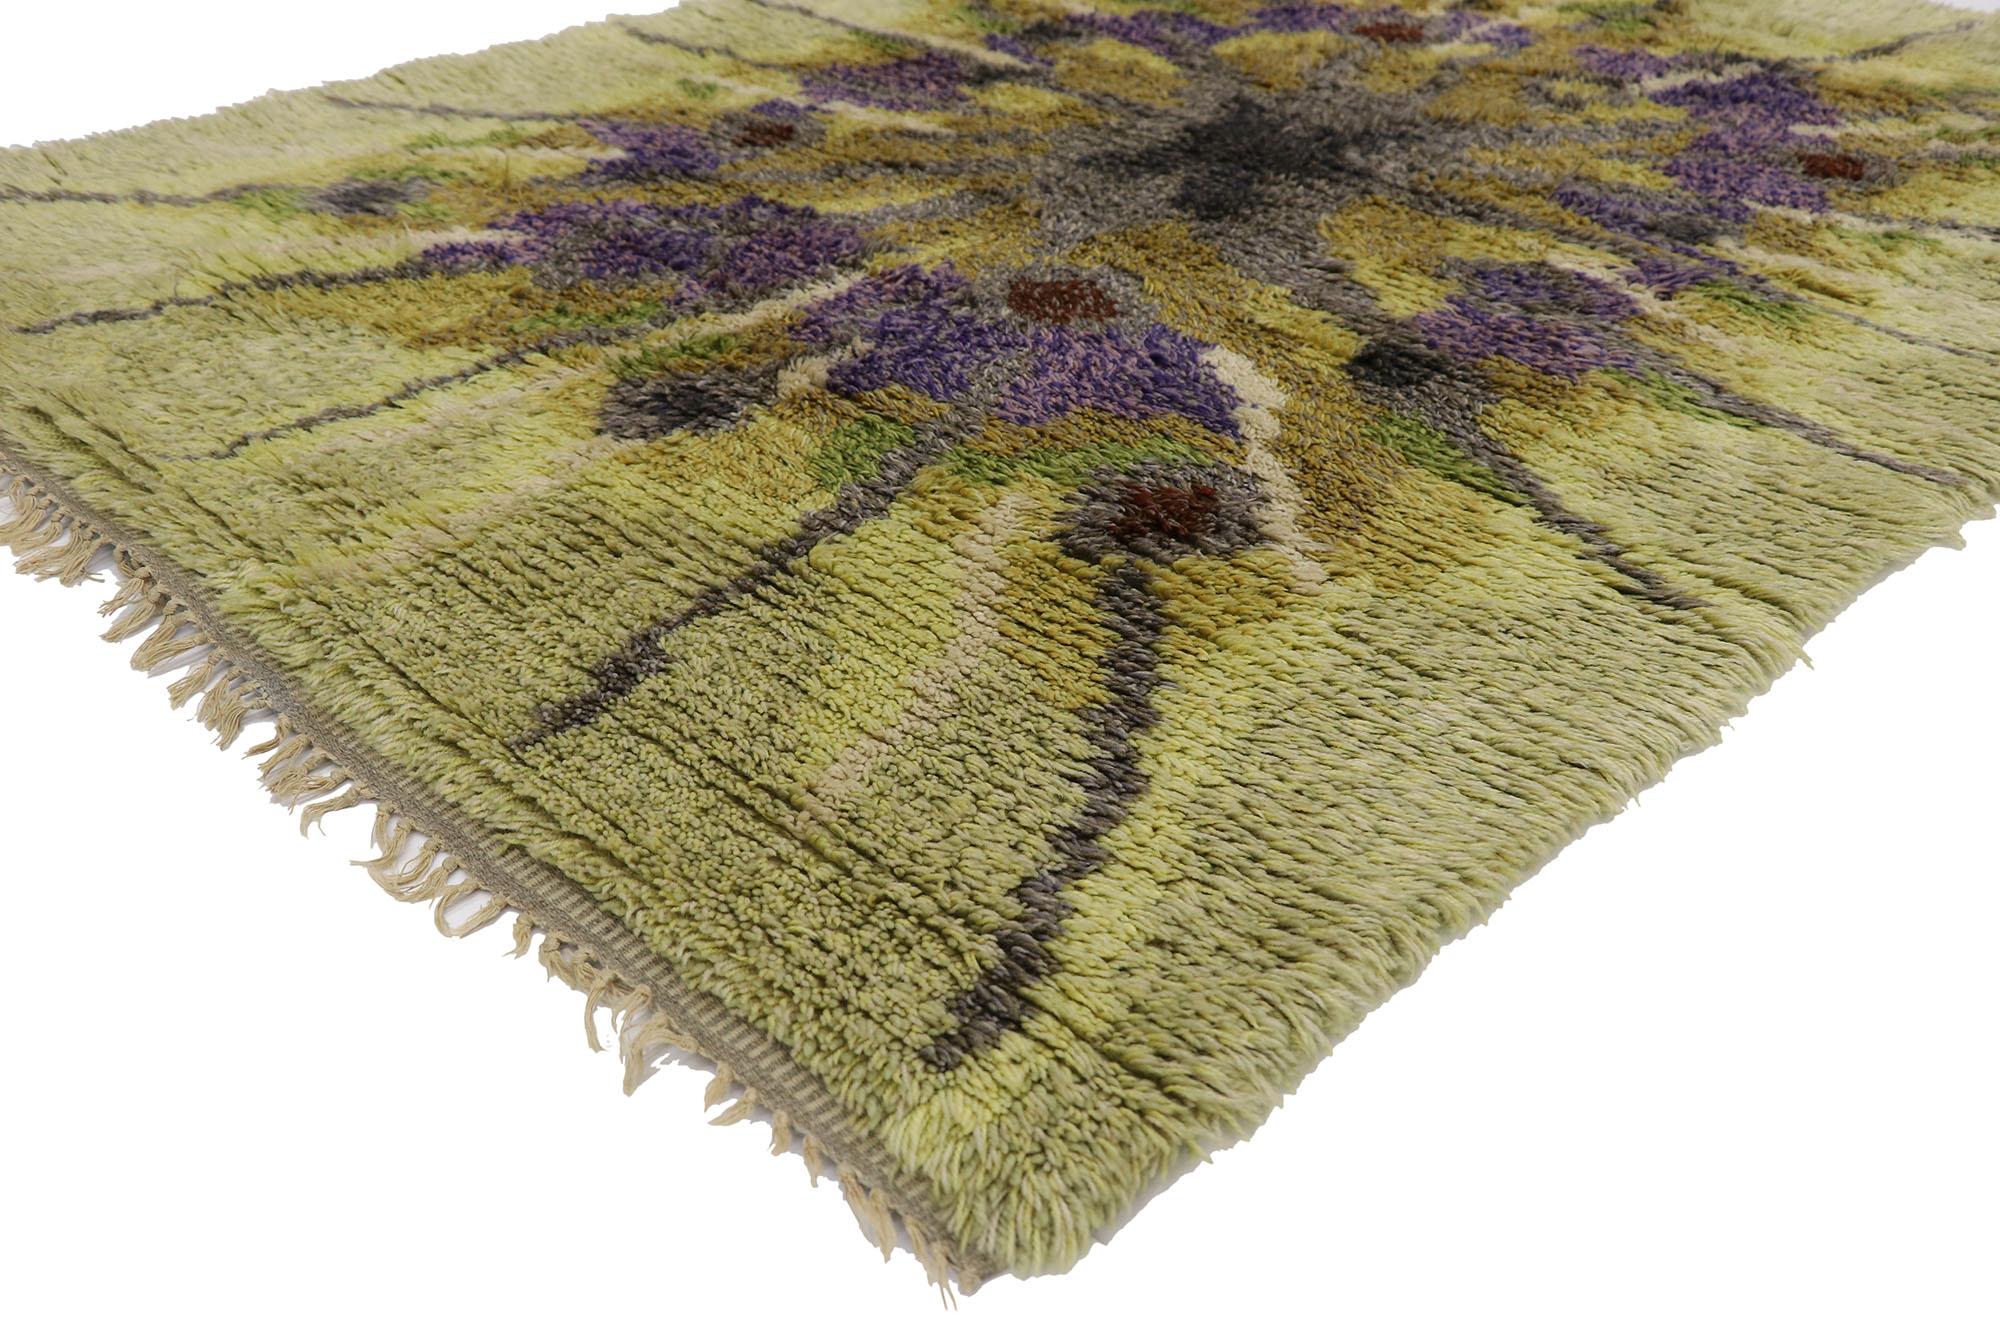 78142 vintage Swedish Krokus flower Ryamatta rug, Tibet by Ingrid Jagarz for Marks Rya 04'08 x 06'07. Showcasing an expressive Crocus-Krokus design, incredible detail and texture, this hand knotted wool vintage Swedish rya is a captivating vision of